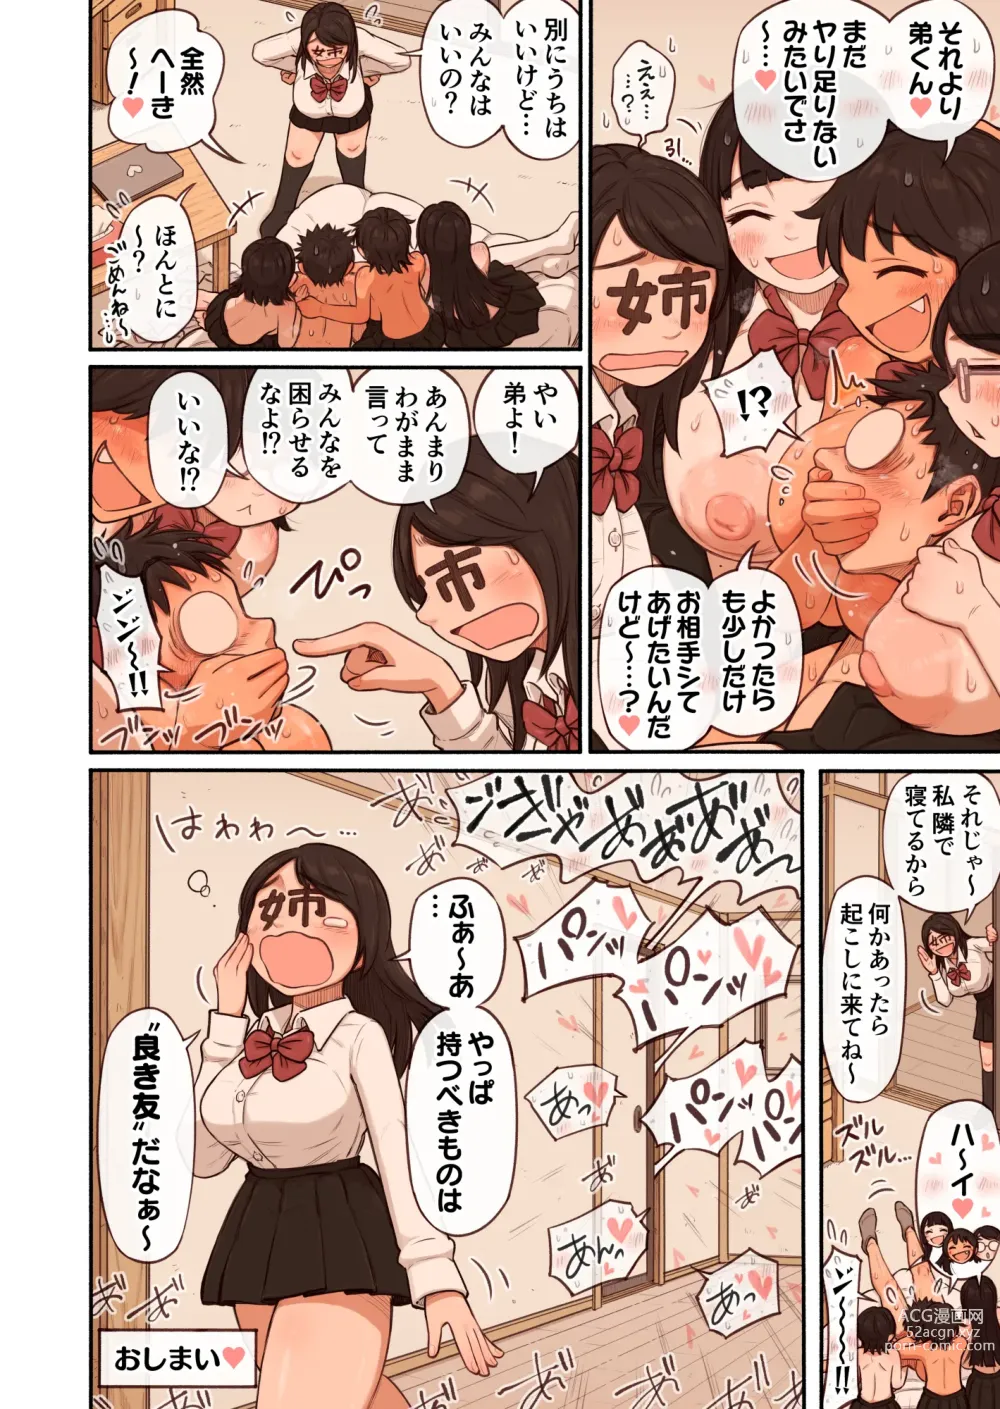 Page 39 of doujinshi Ane no akuyuu